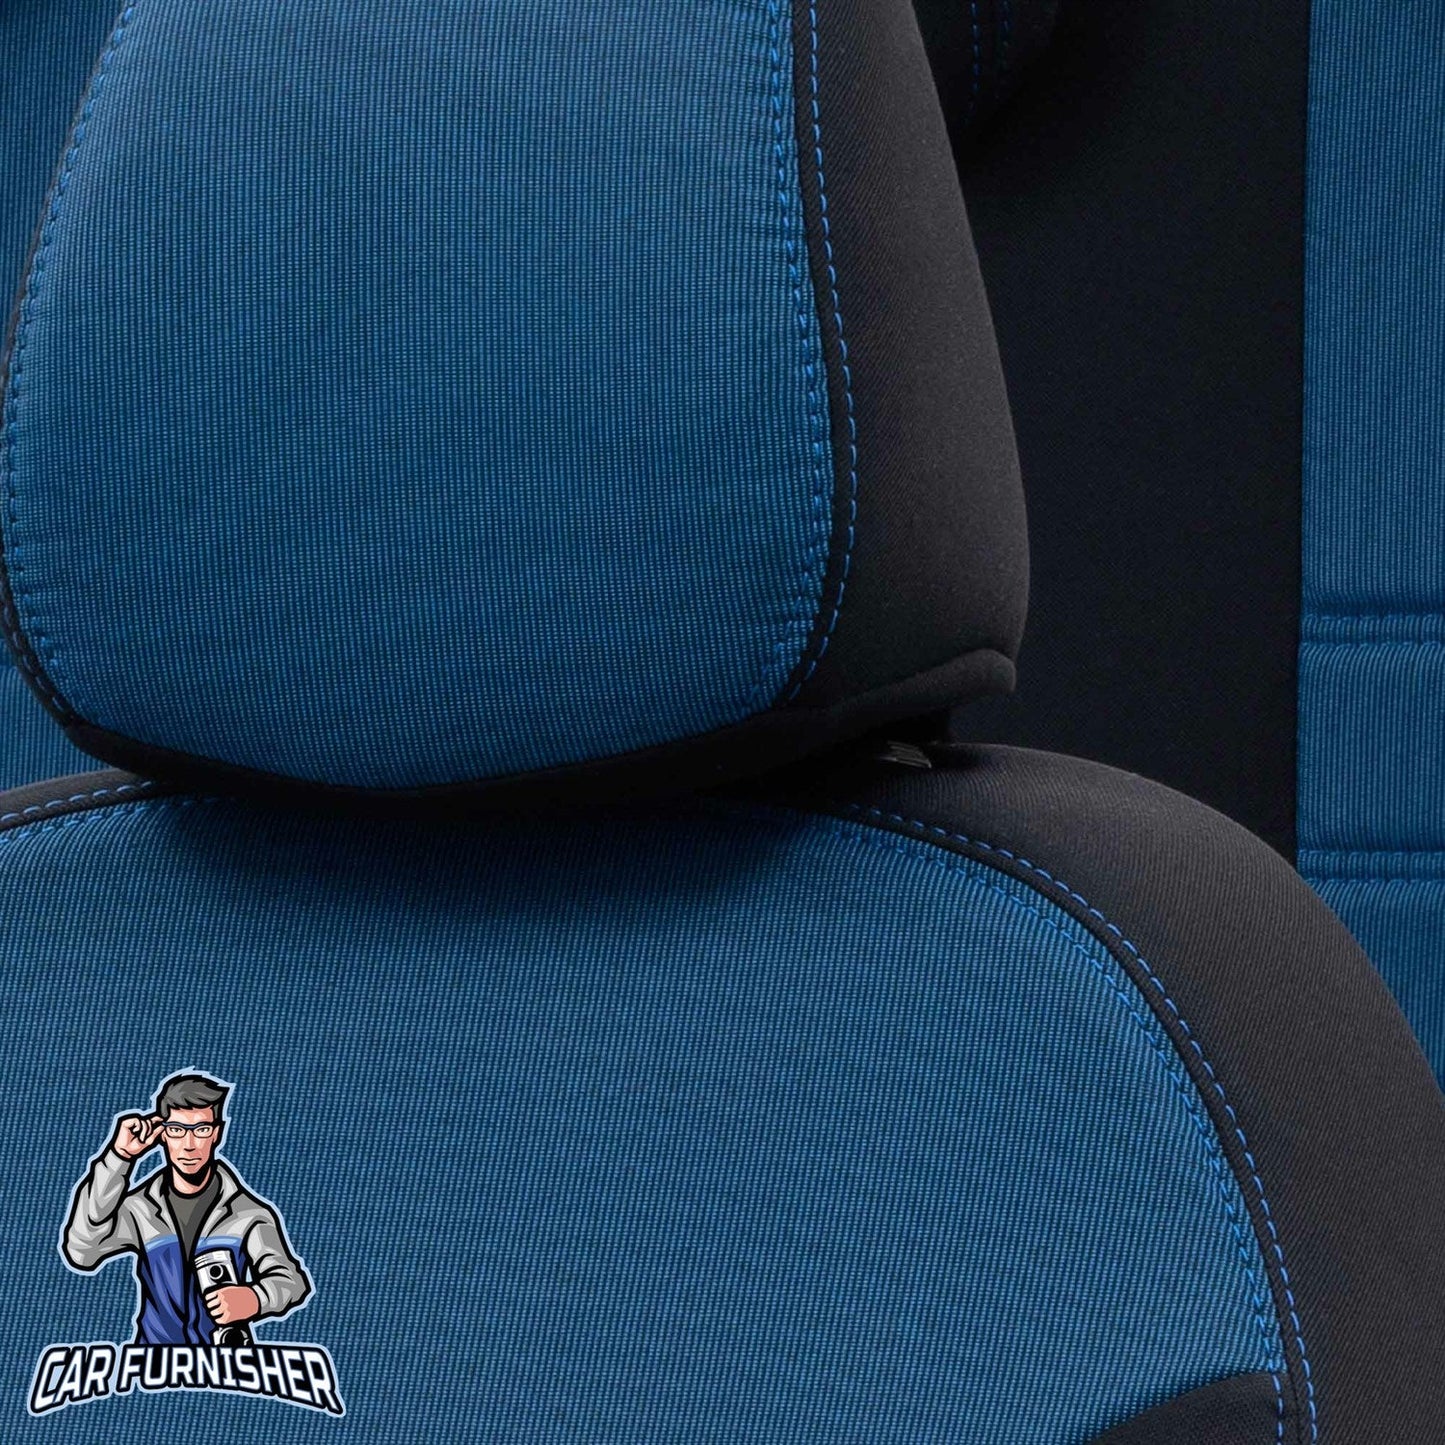 Nissan X-Trail Seat Covers Original Jacquard Design Blue Jacquard Fabric